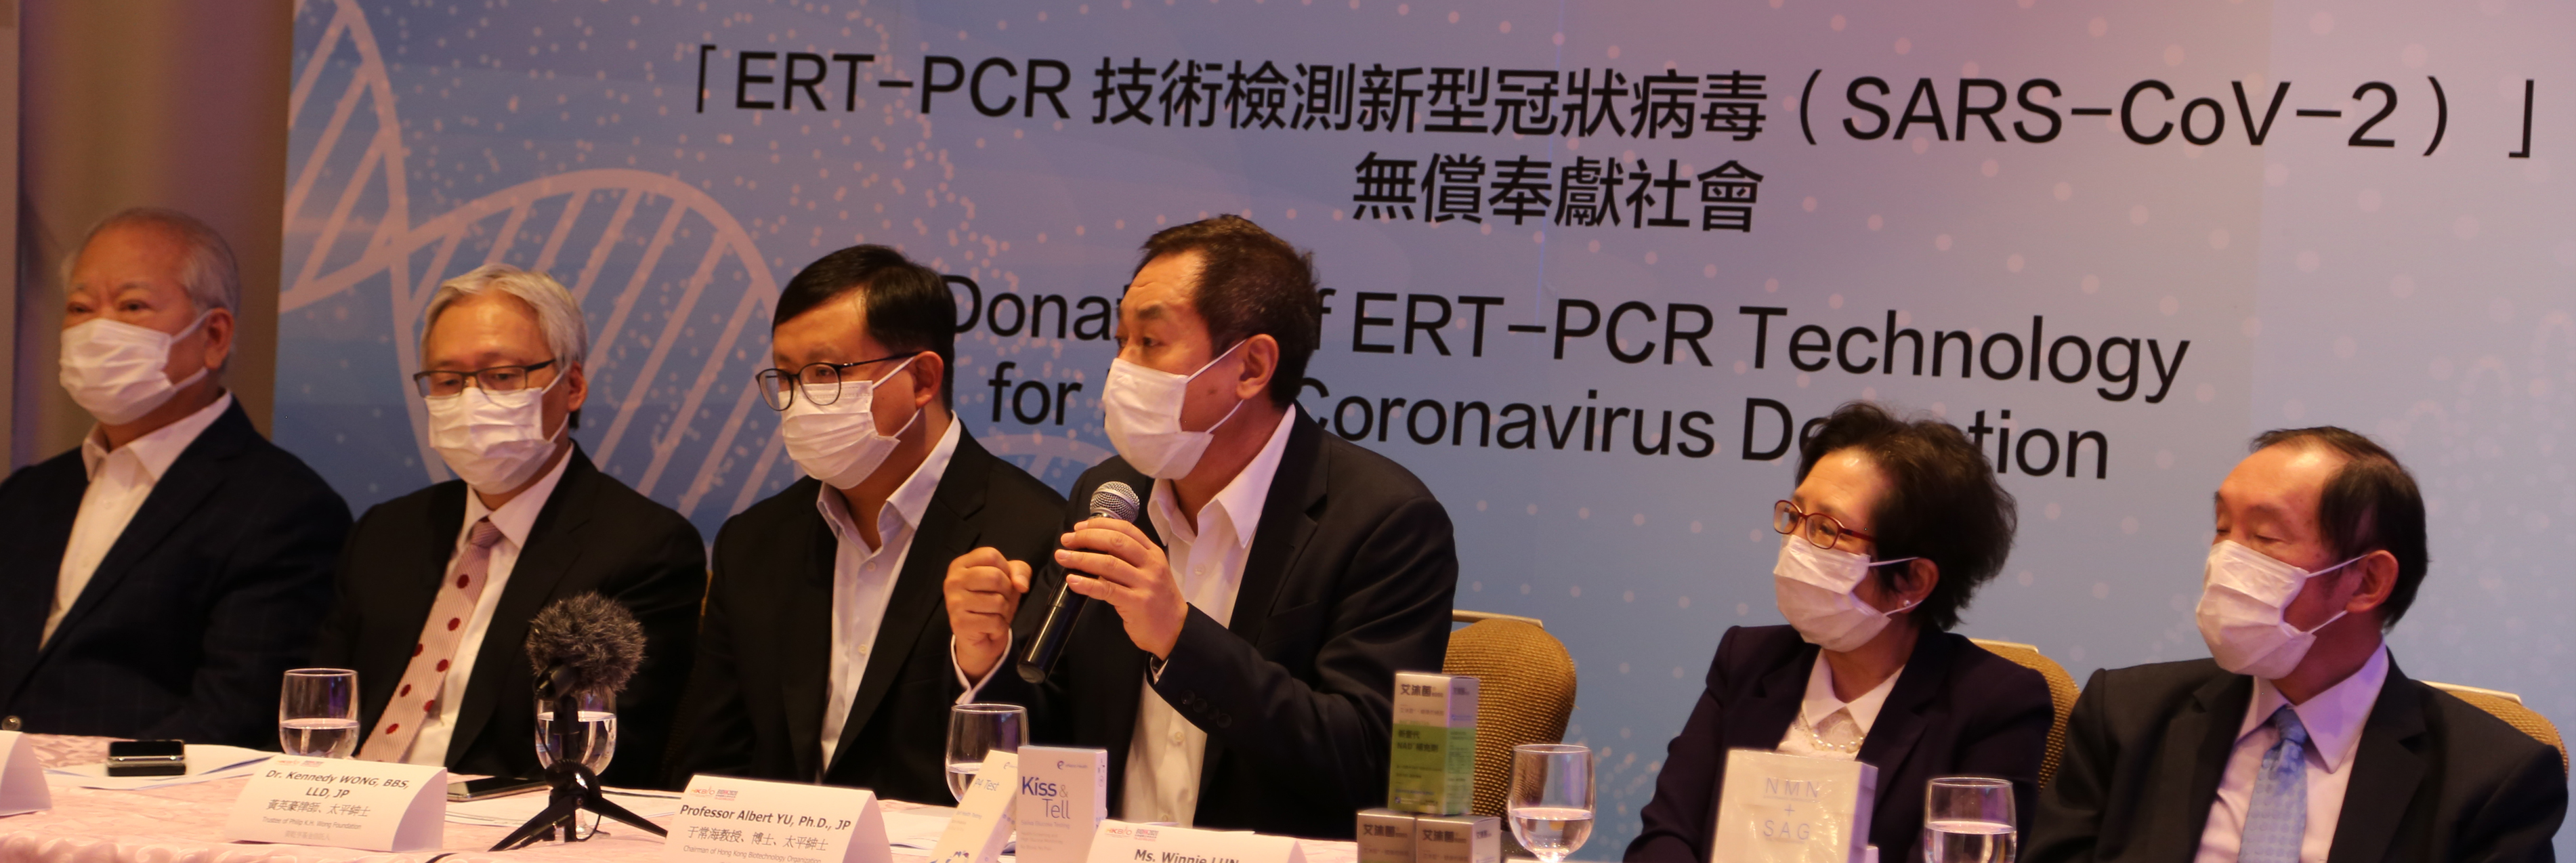 Press Conference for Donation of ERT-PCR technology for new coronavirus detection